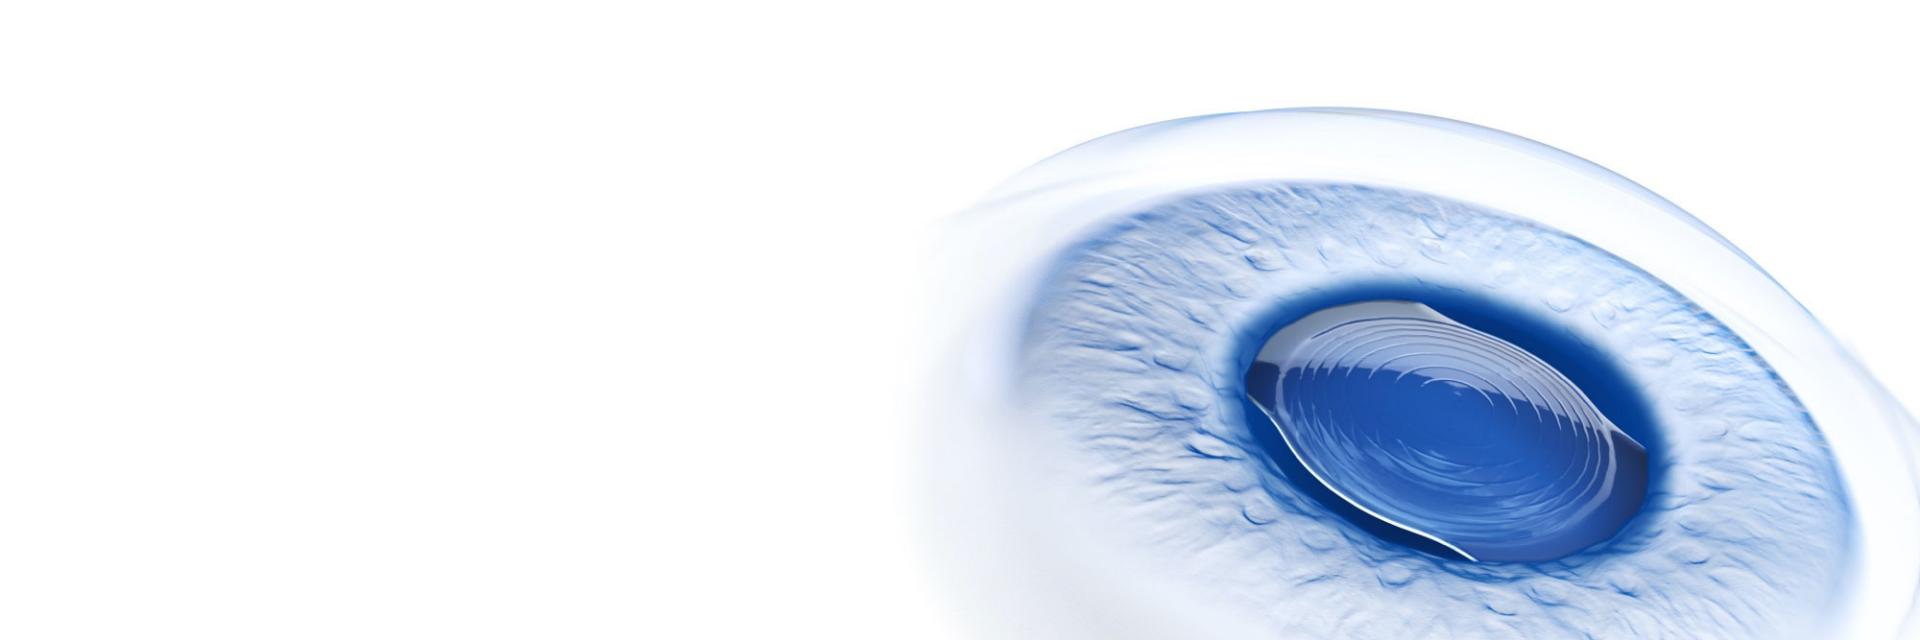 ZEISS Premium Cataract Workflow